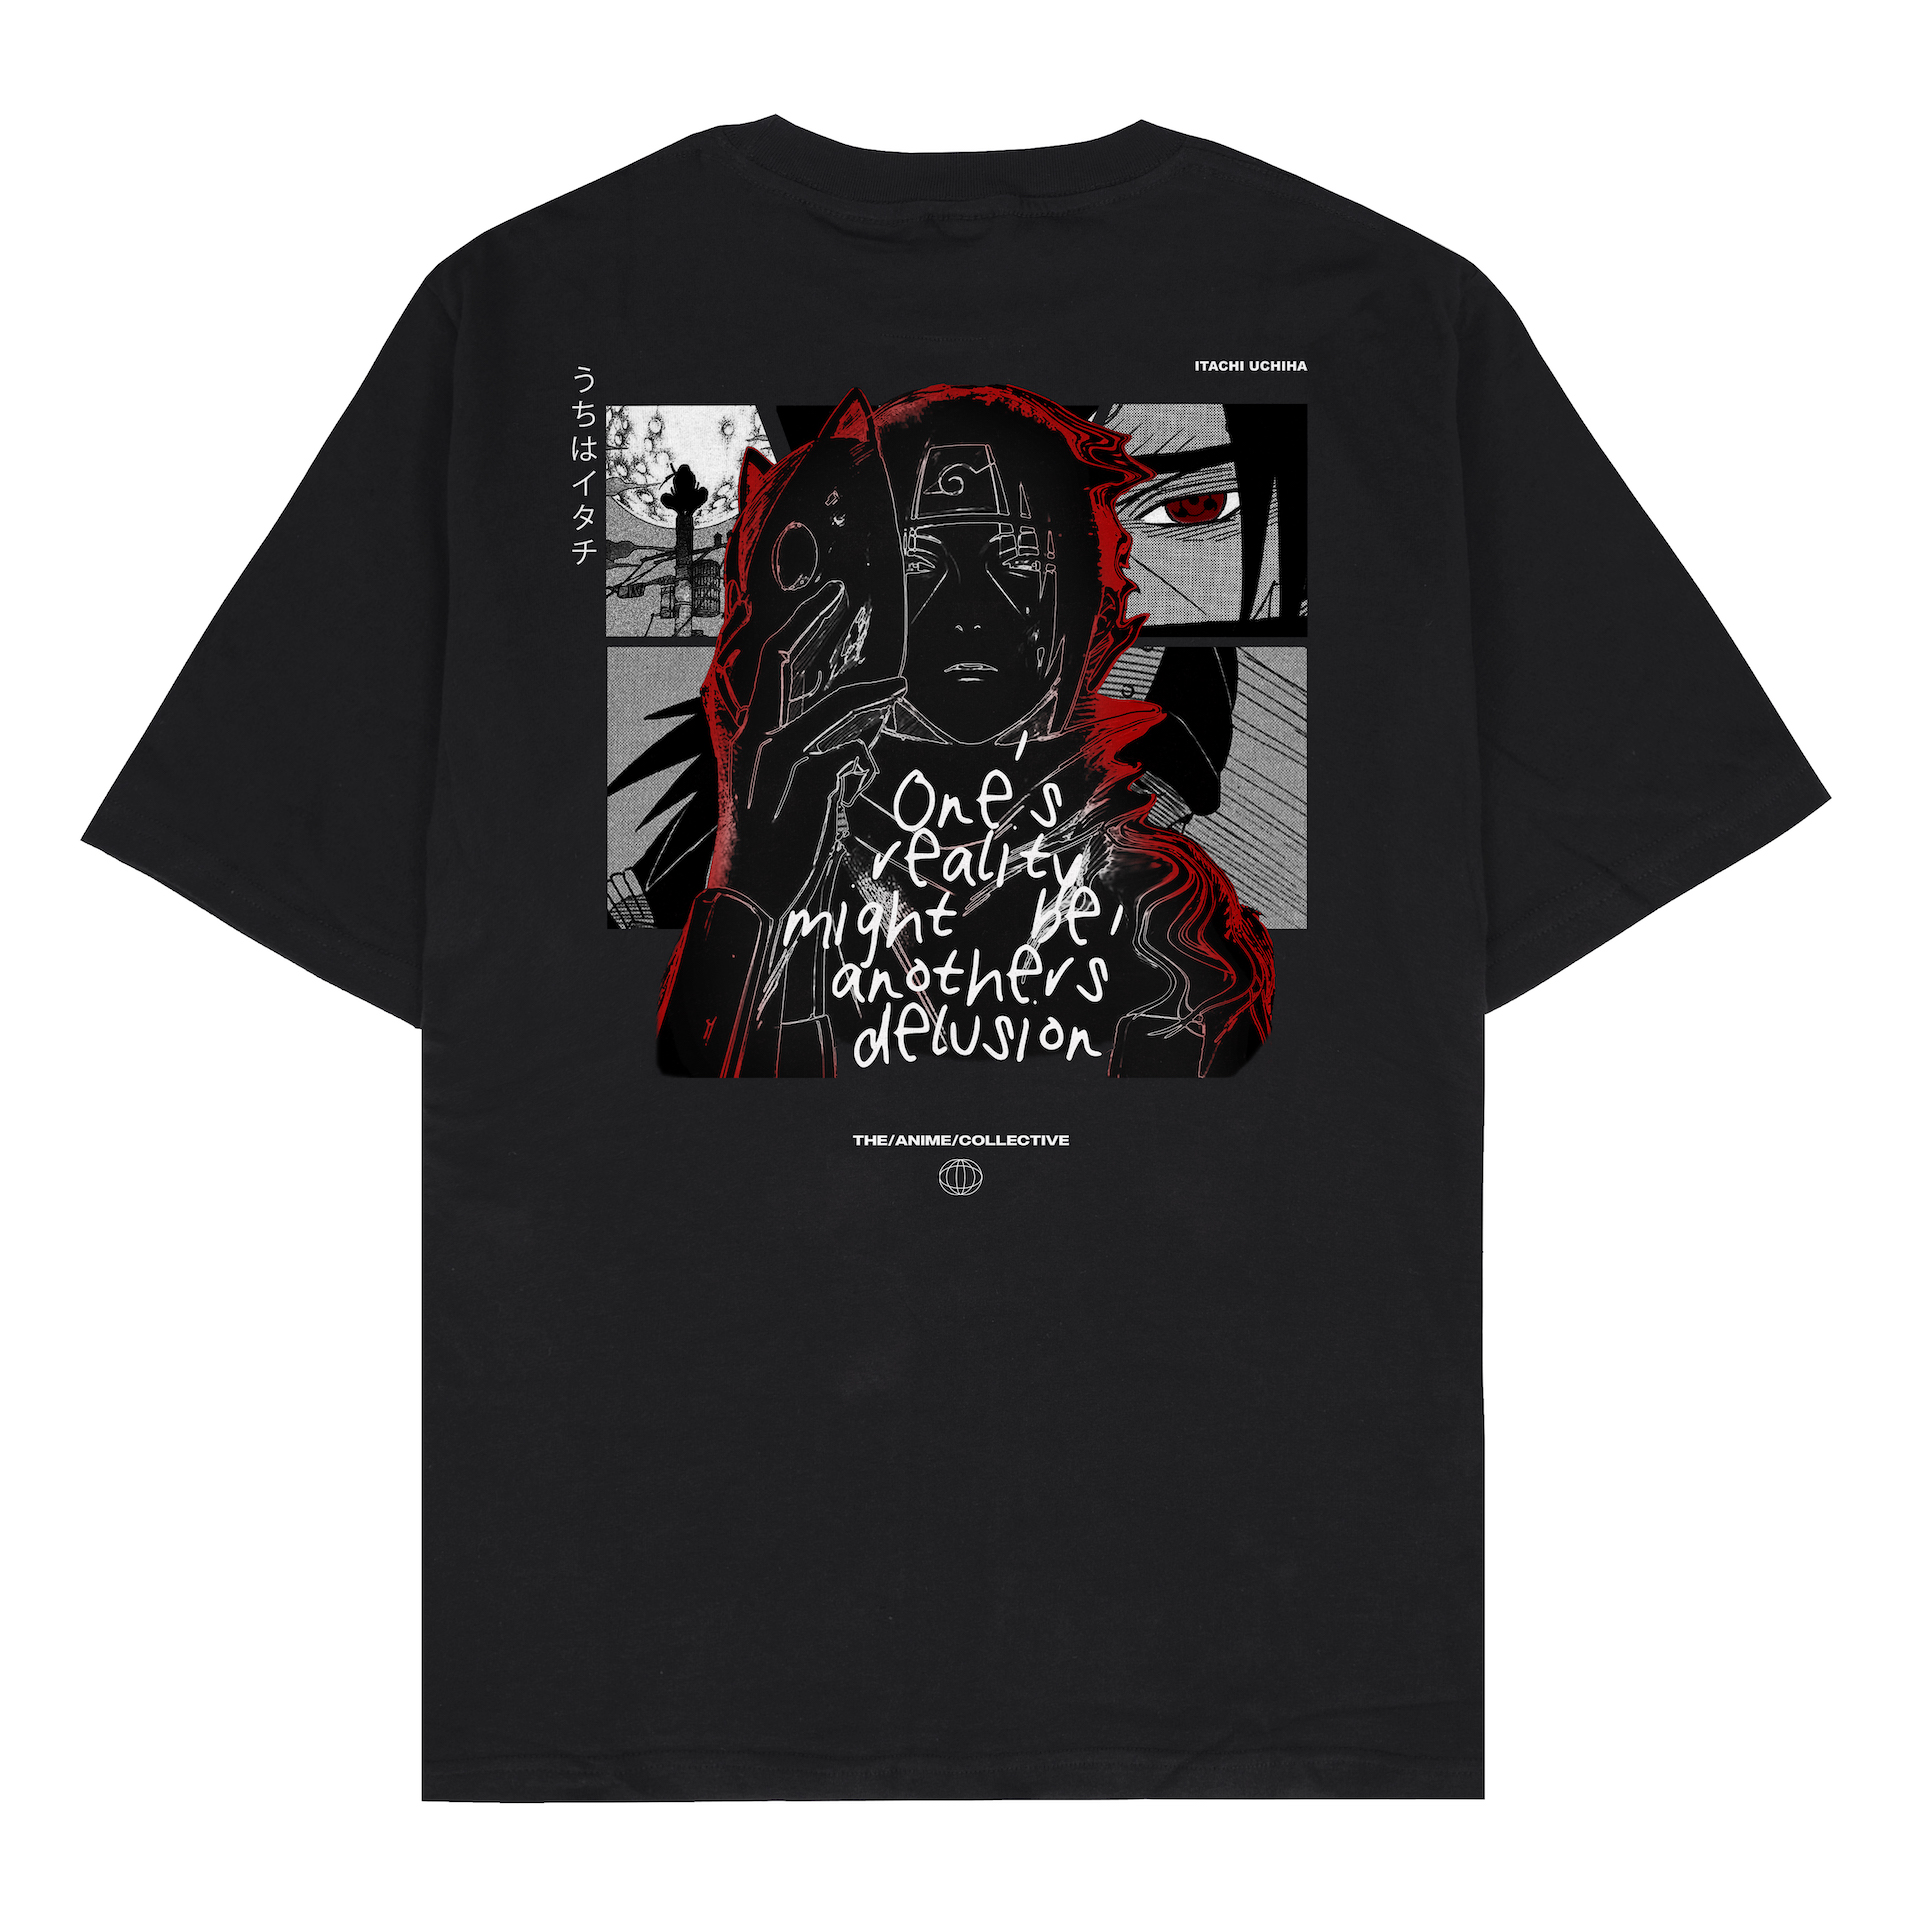 Uchiha Itachi "Illusion" T-Shirt | Naruto Shippuden